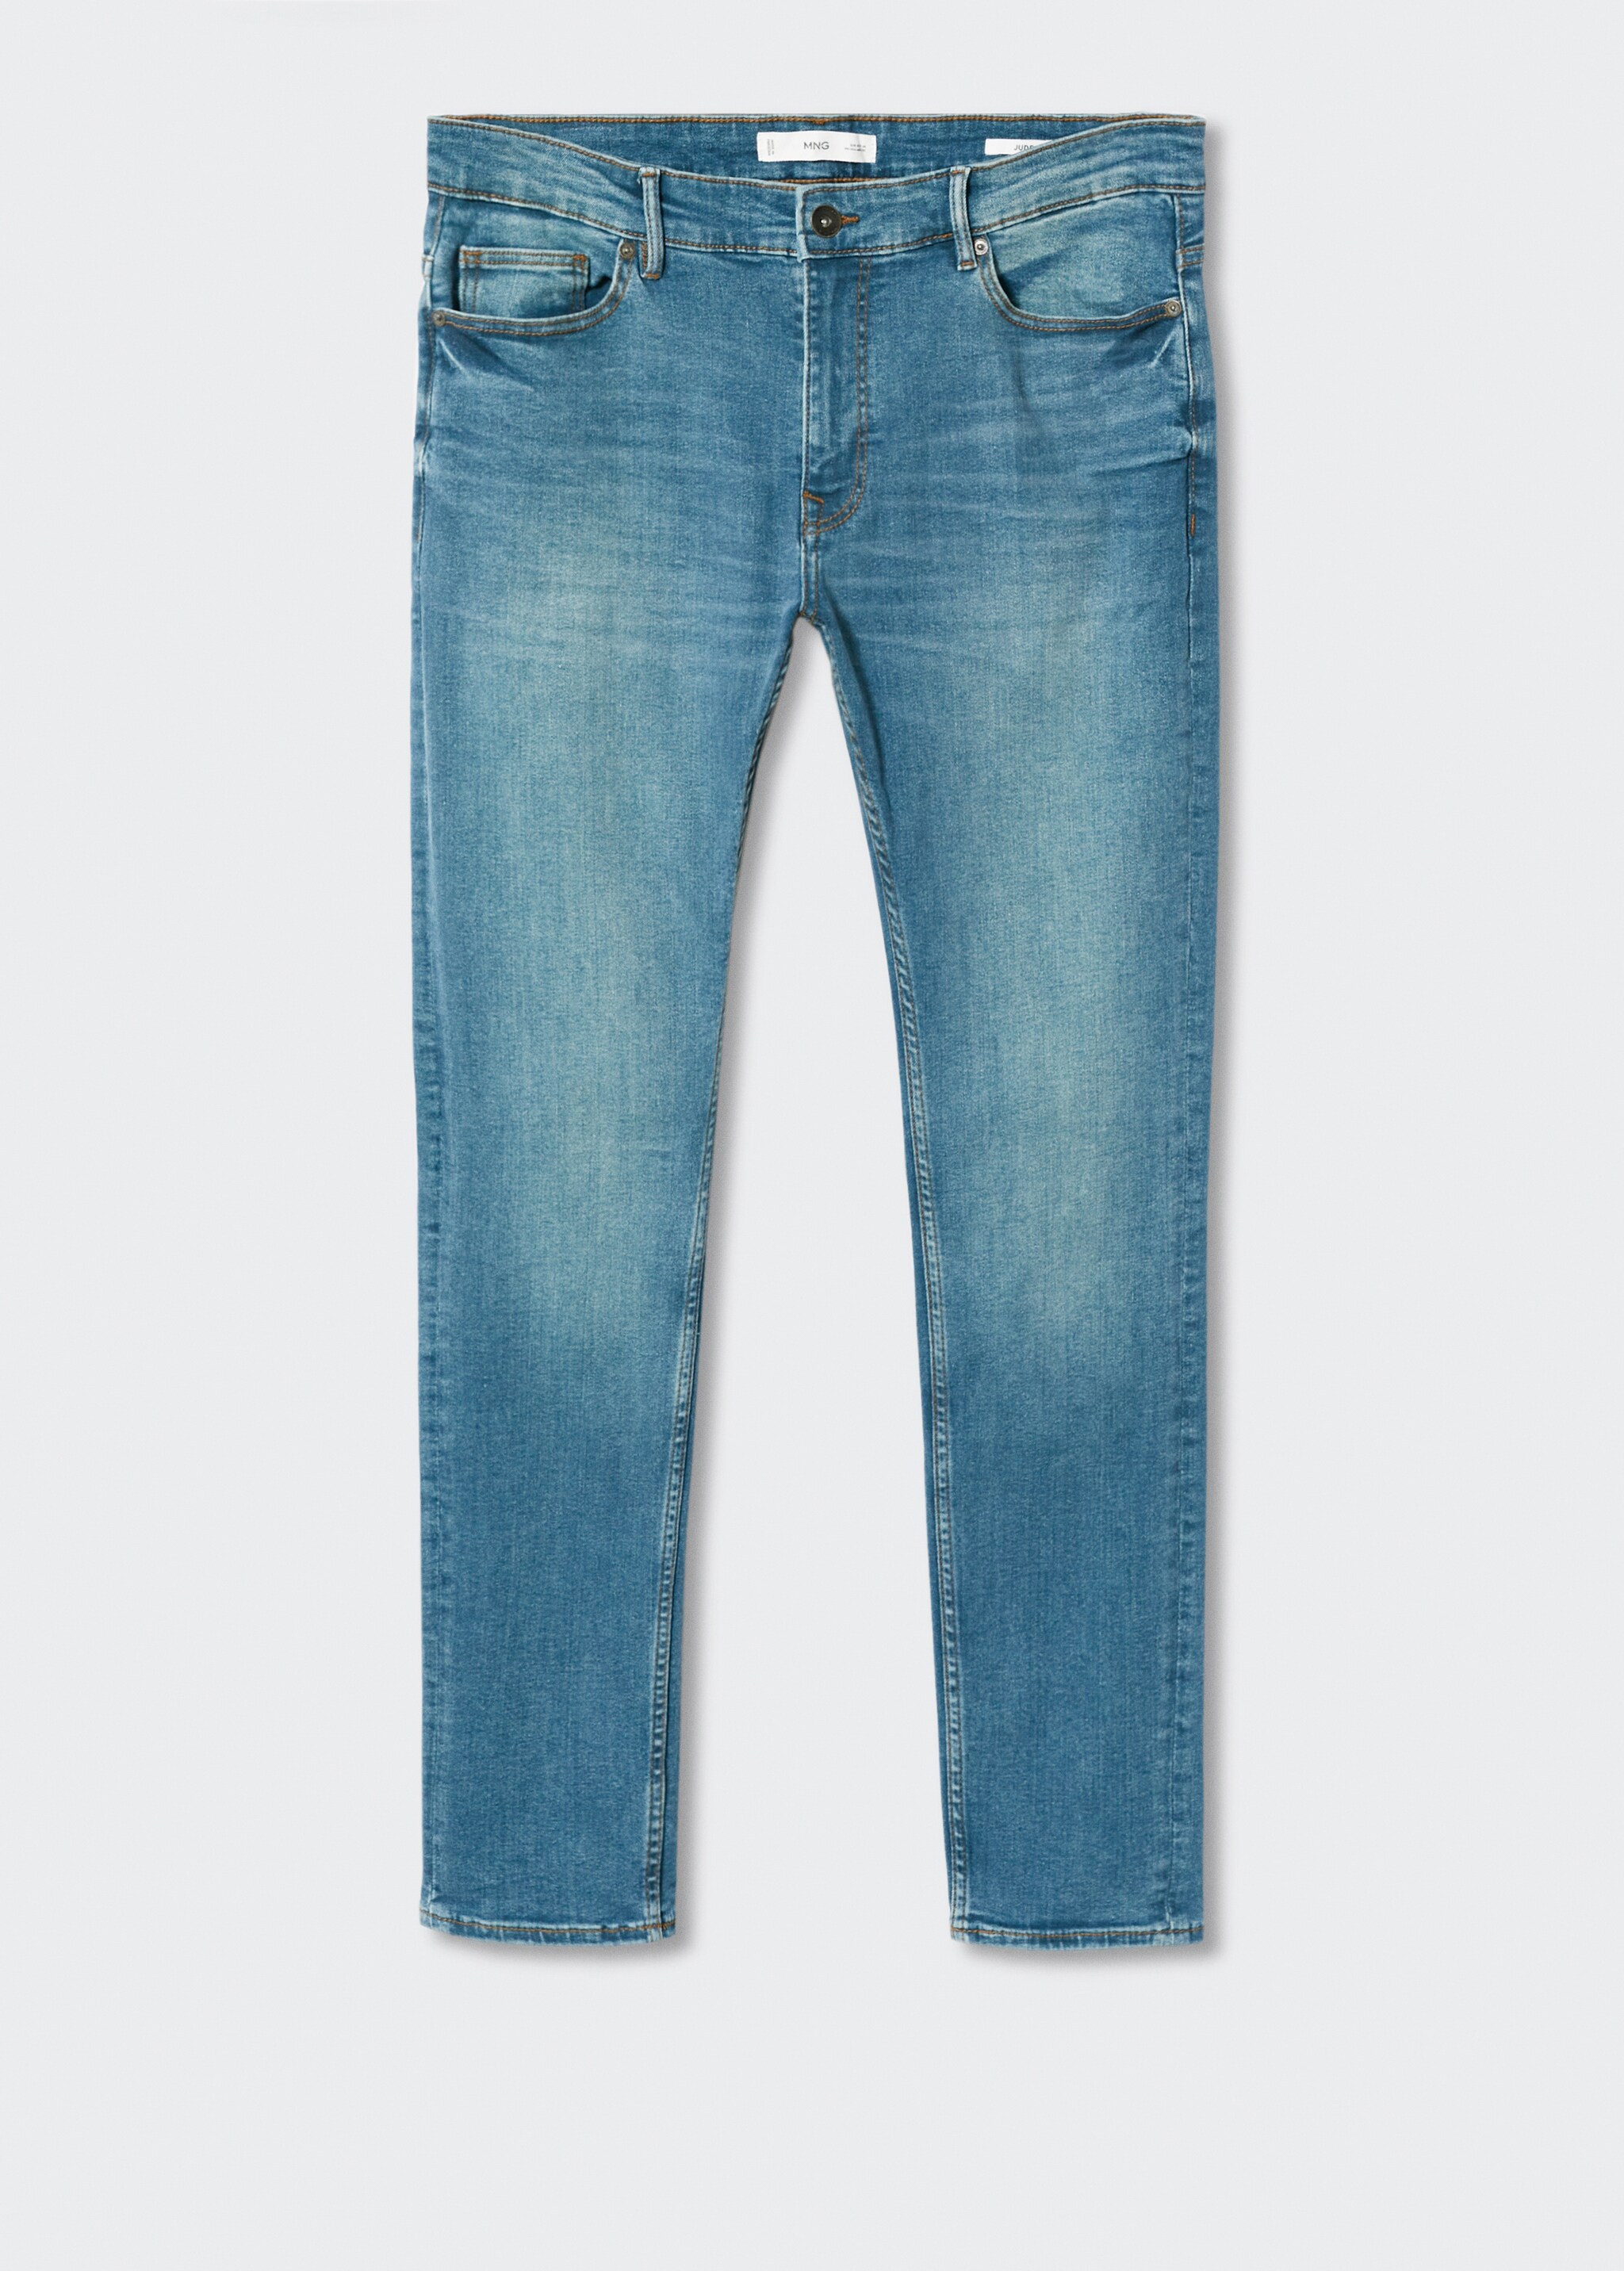 Jeans Jude skinny fit - Artículo sin modelo